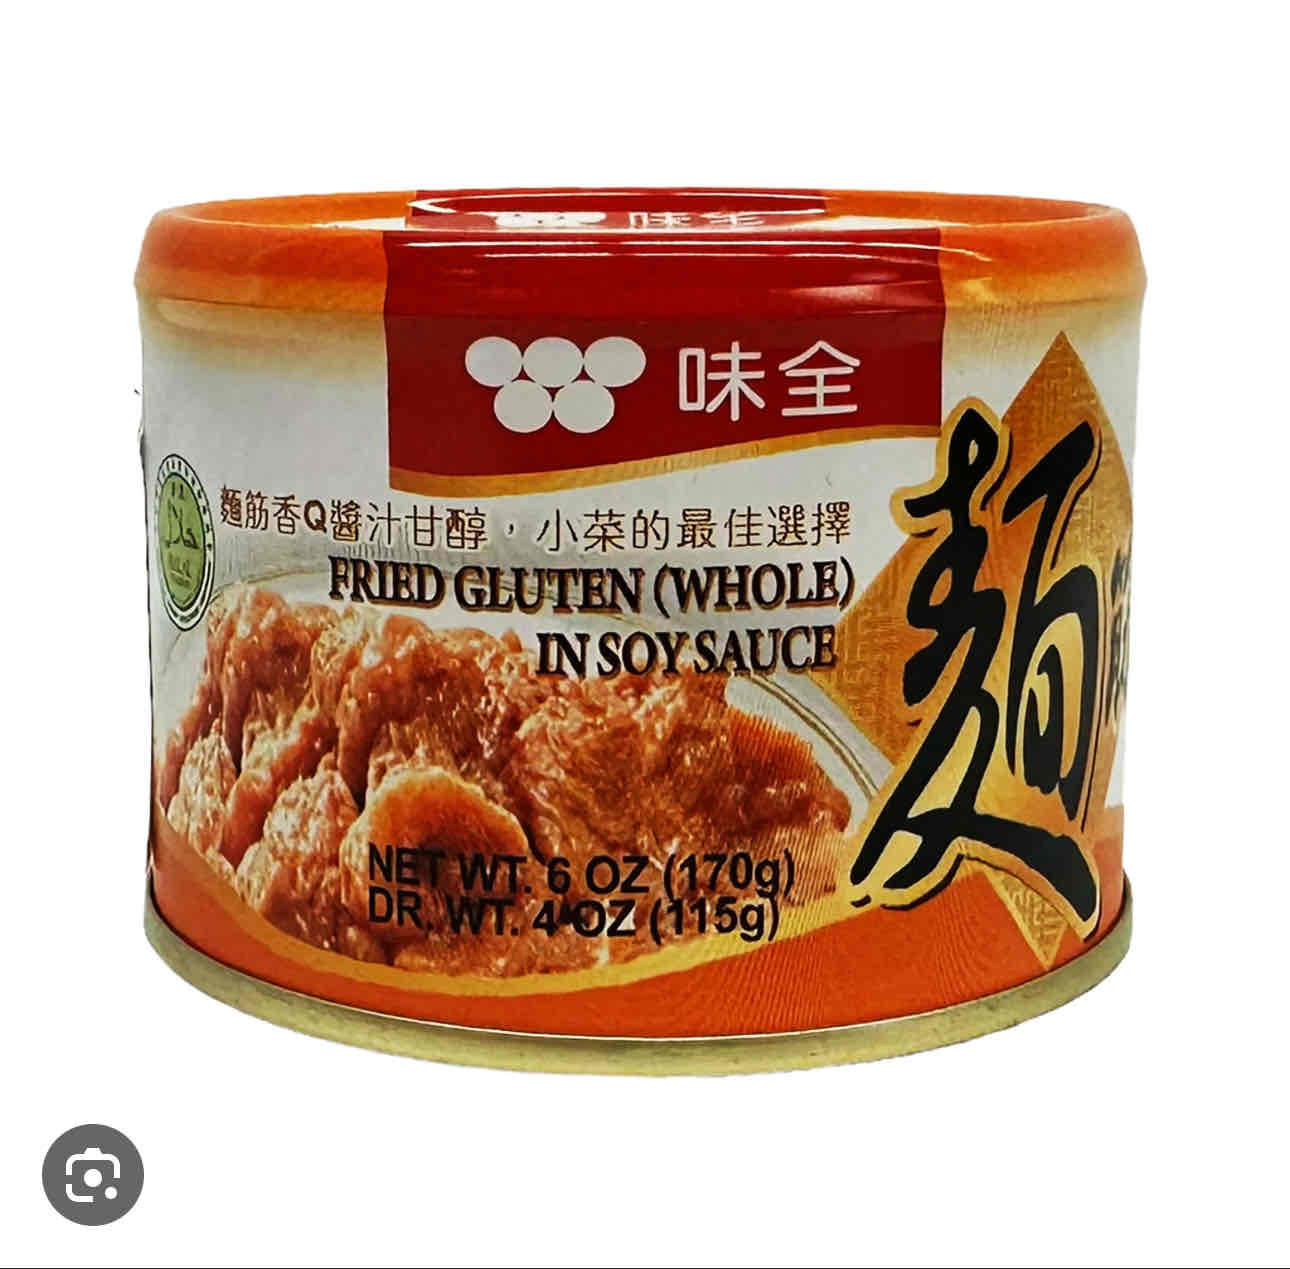 fried gluten in a can